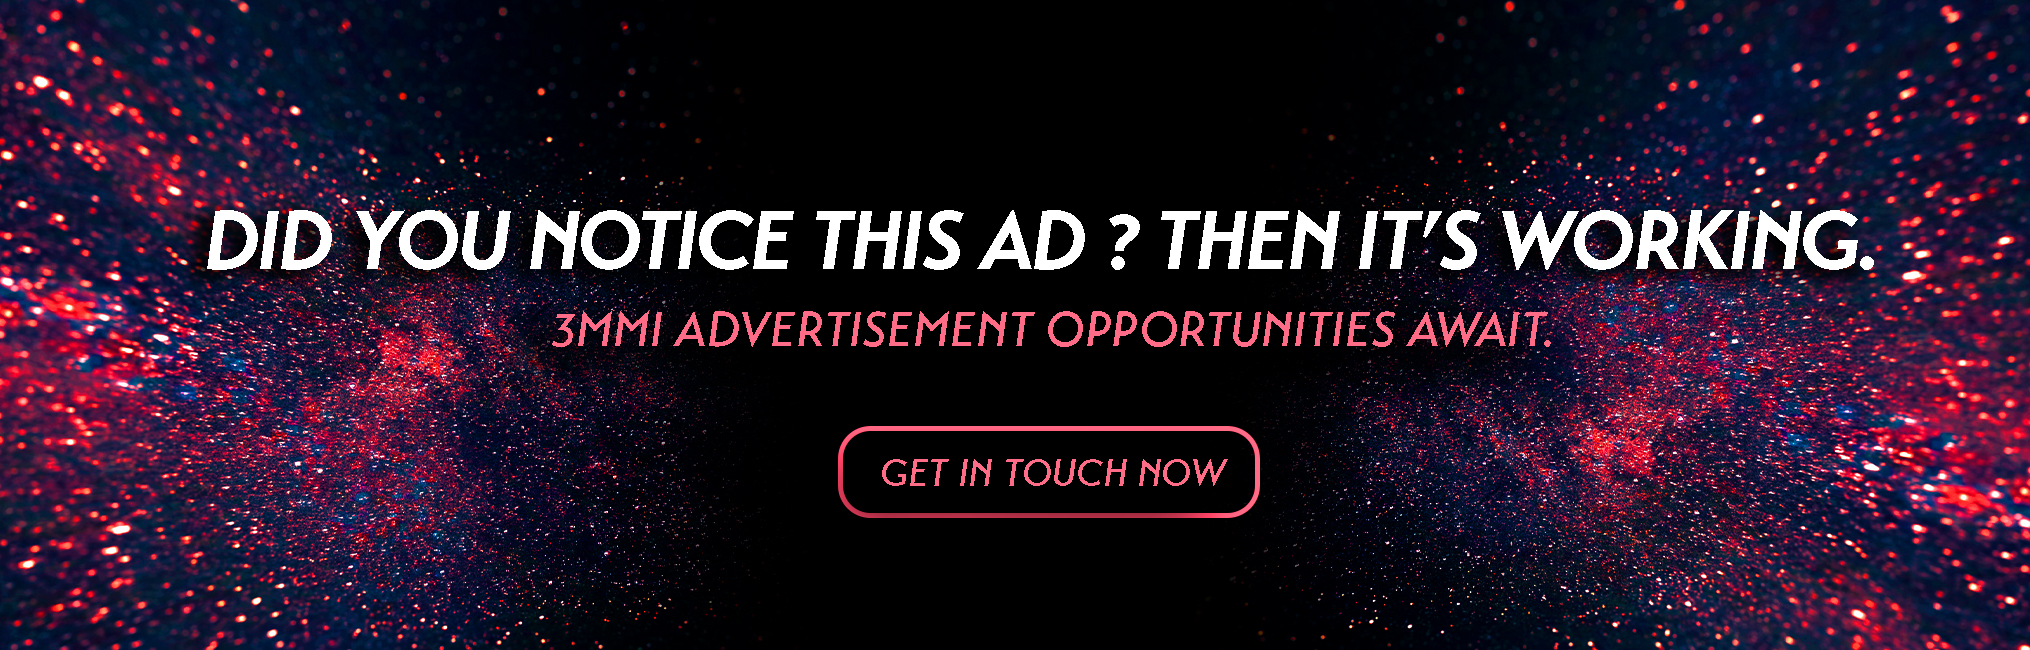 Advertise on the 3MMI